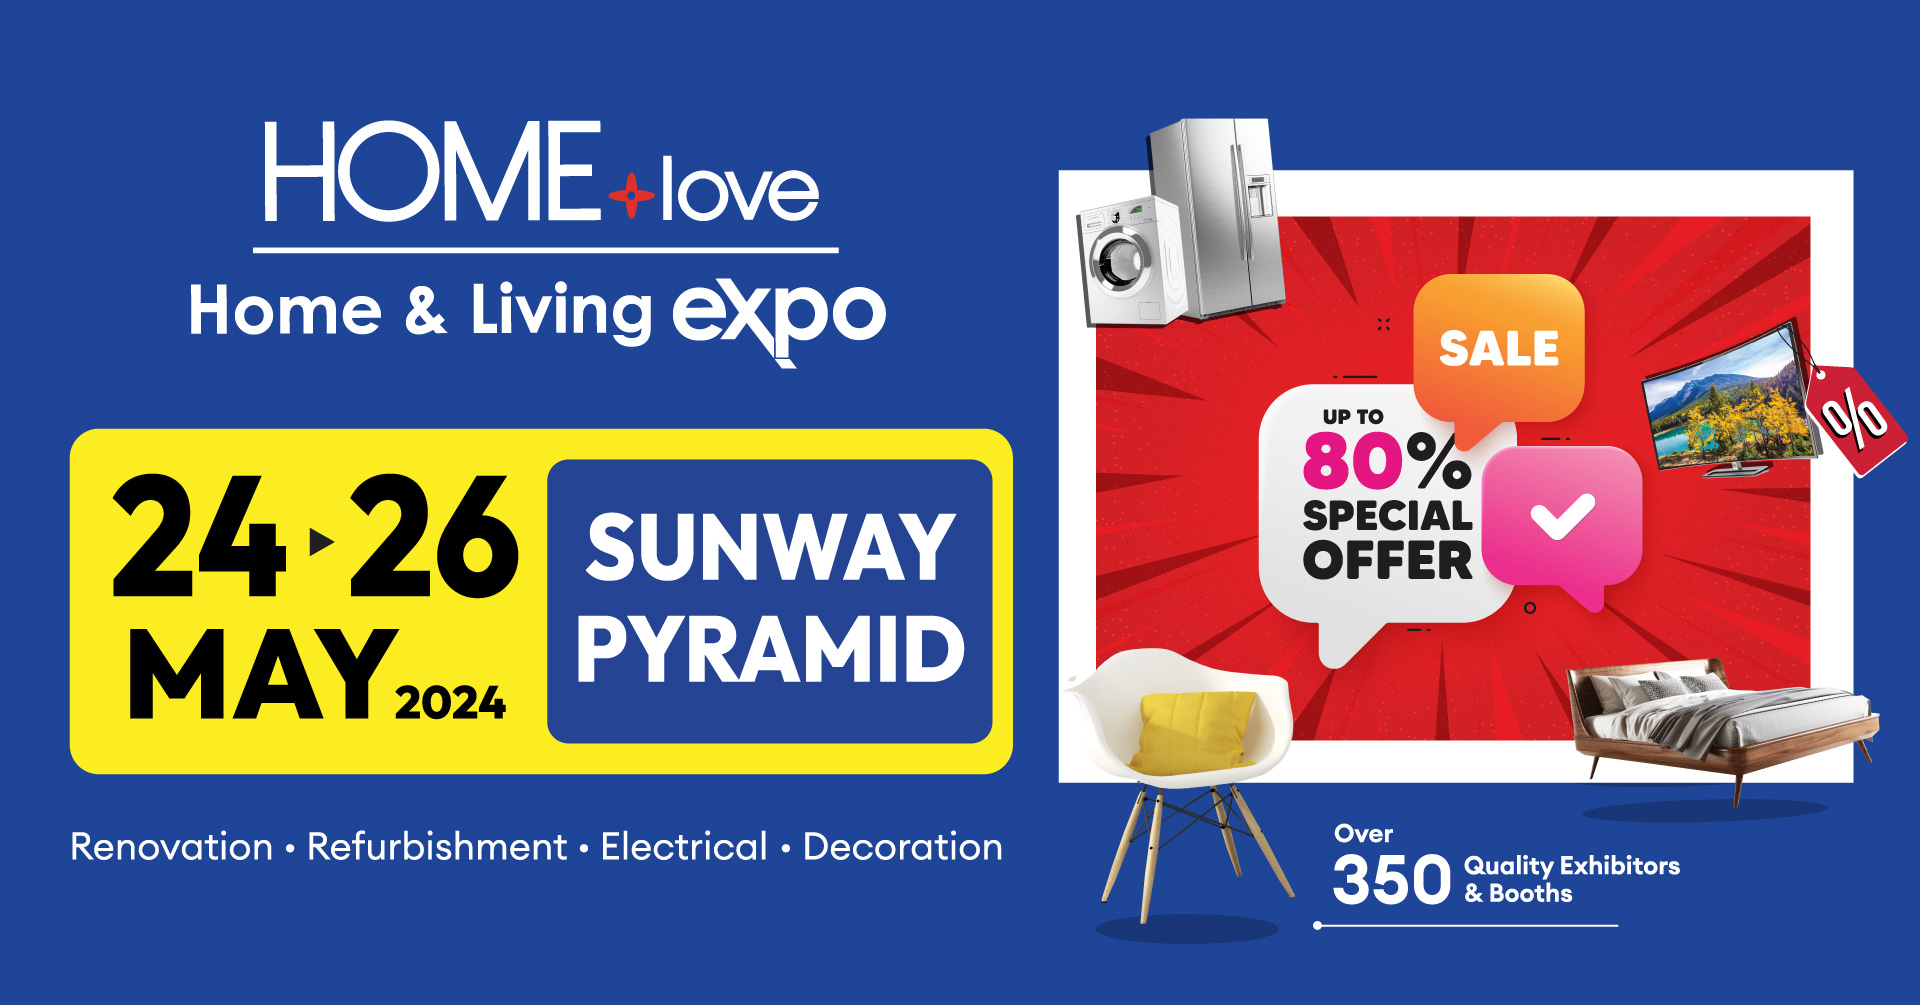 HOMElove Home & Living Expo: 24-26 May 2024@Sunway Pyramid